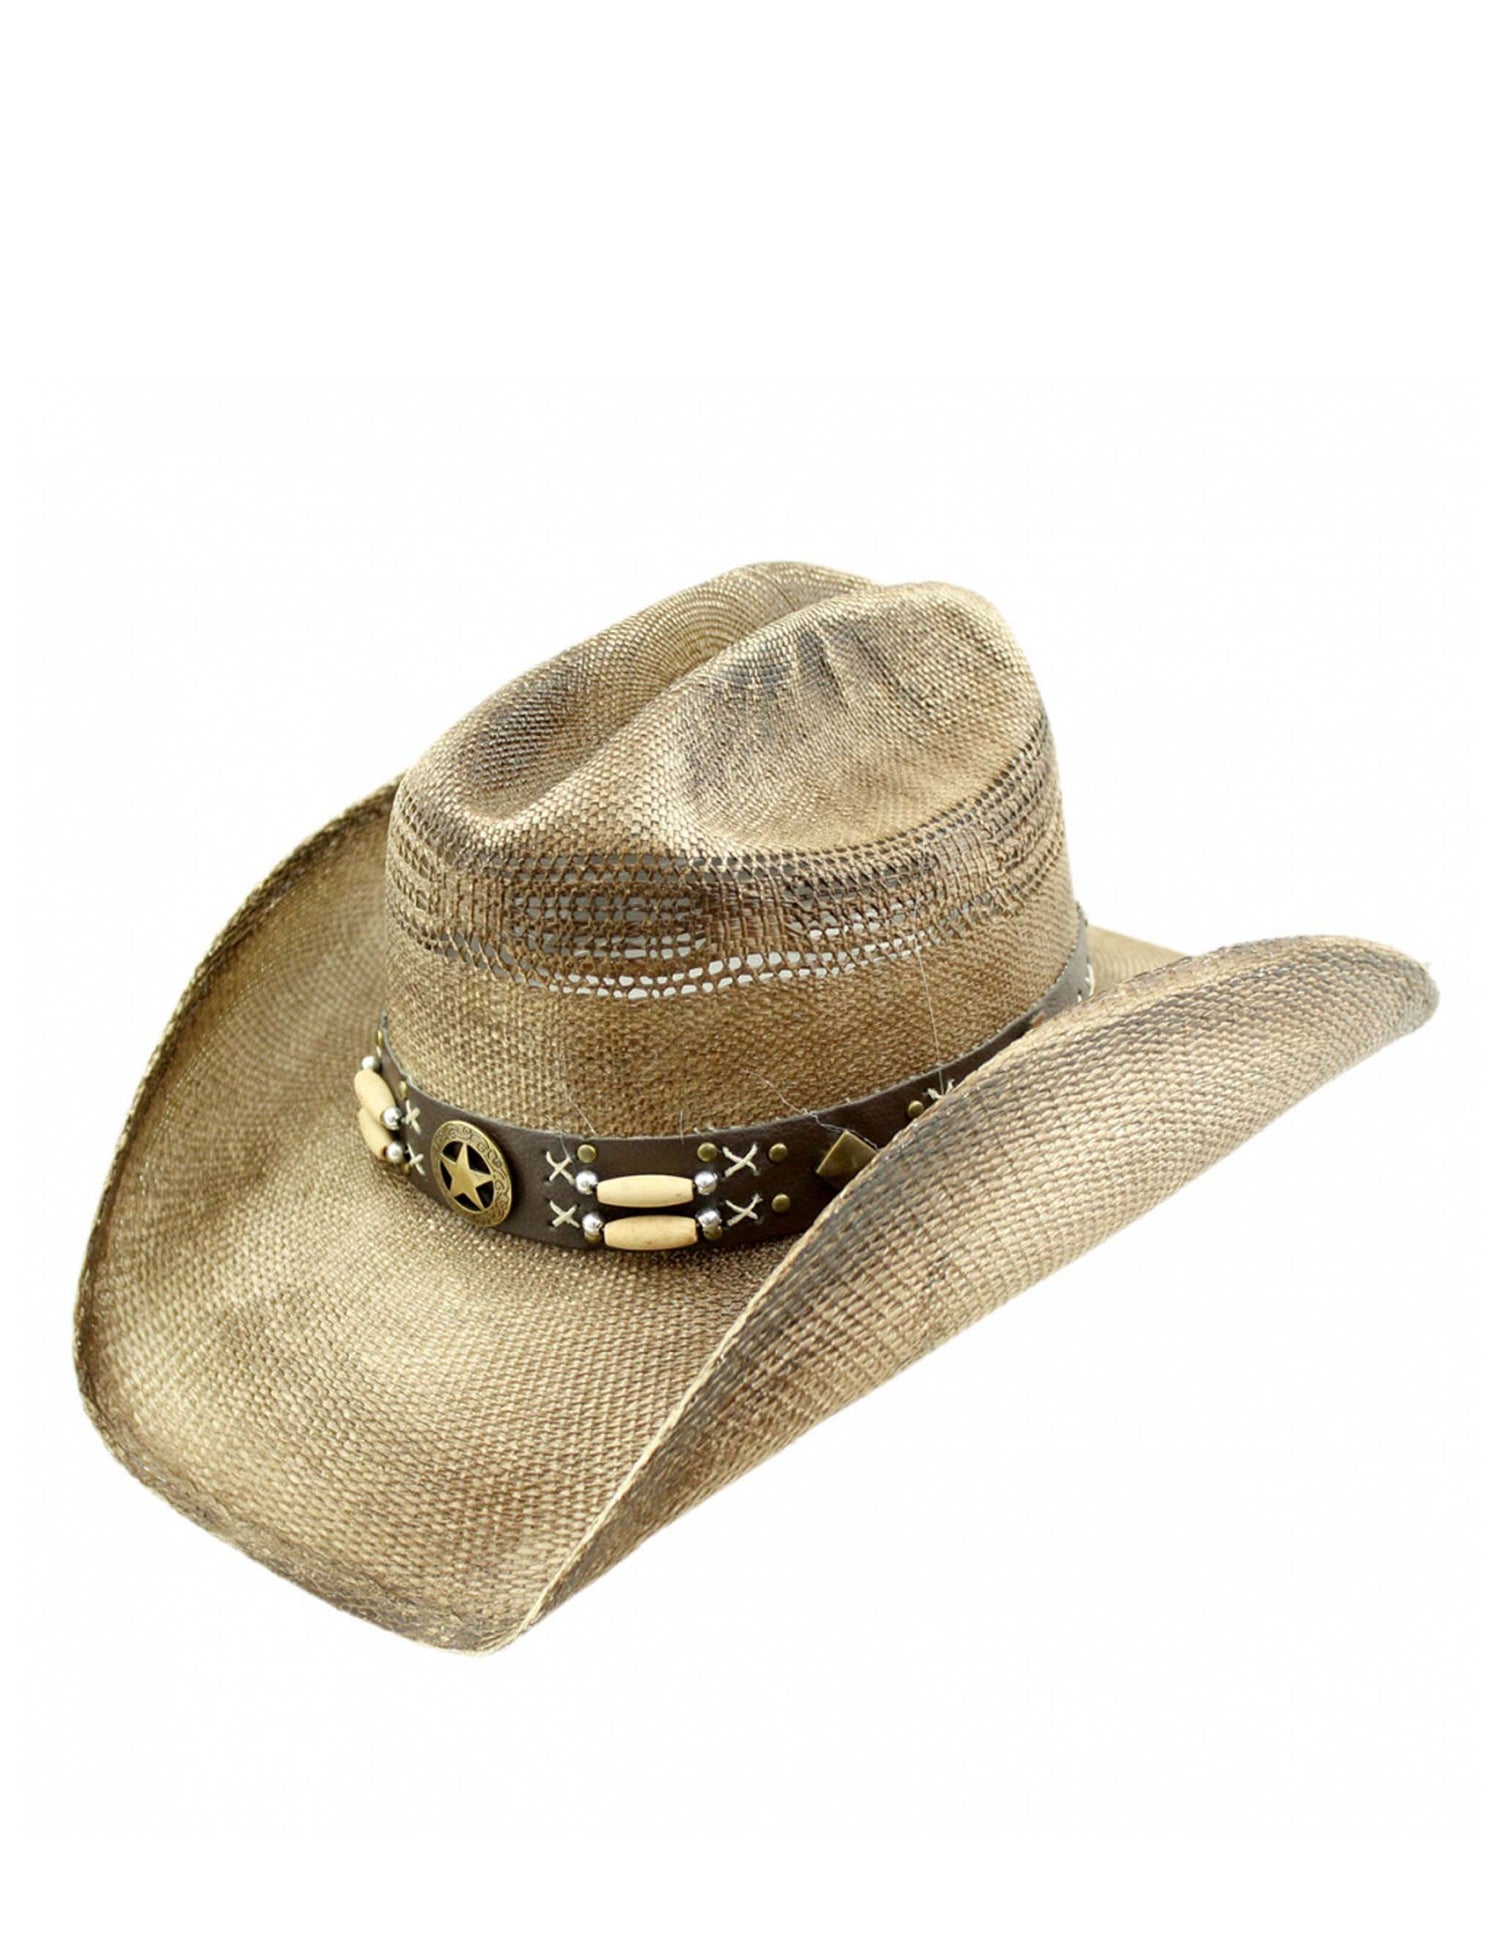 California Hat Company Star Buckle Cowboy Hat